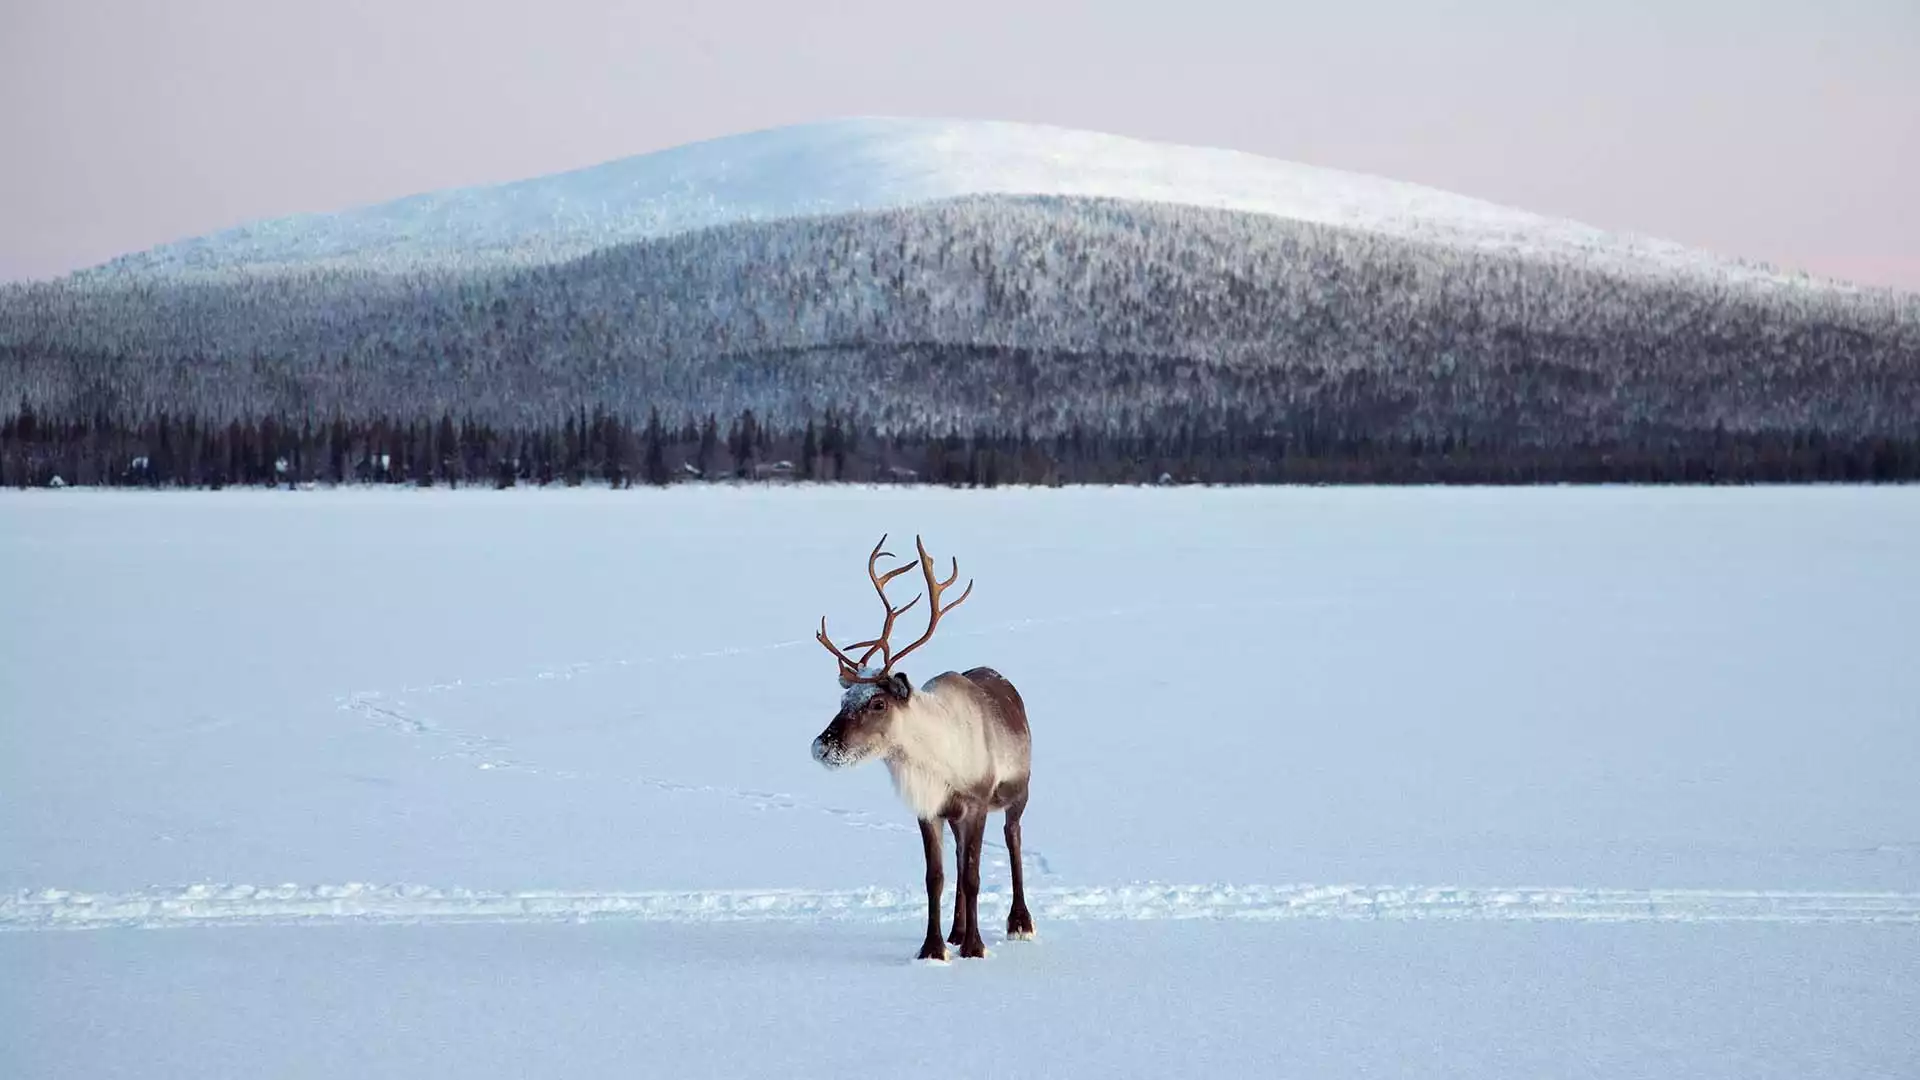 Tervetuloa Lappiin – Welkom in Lapland!